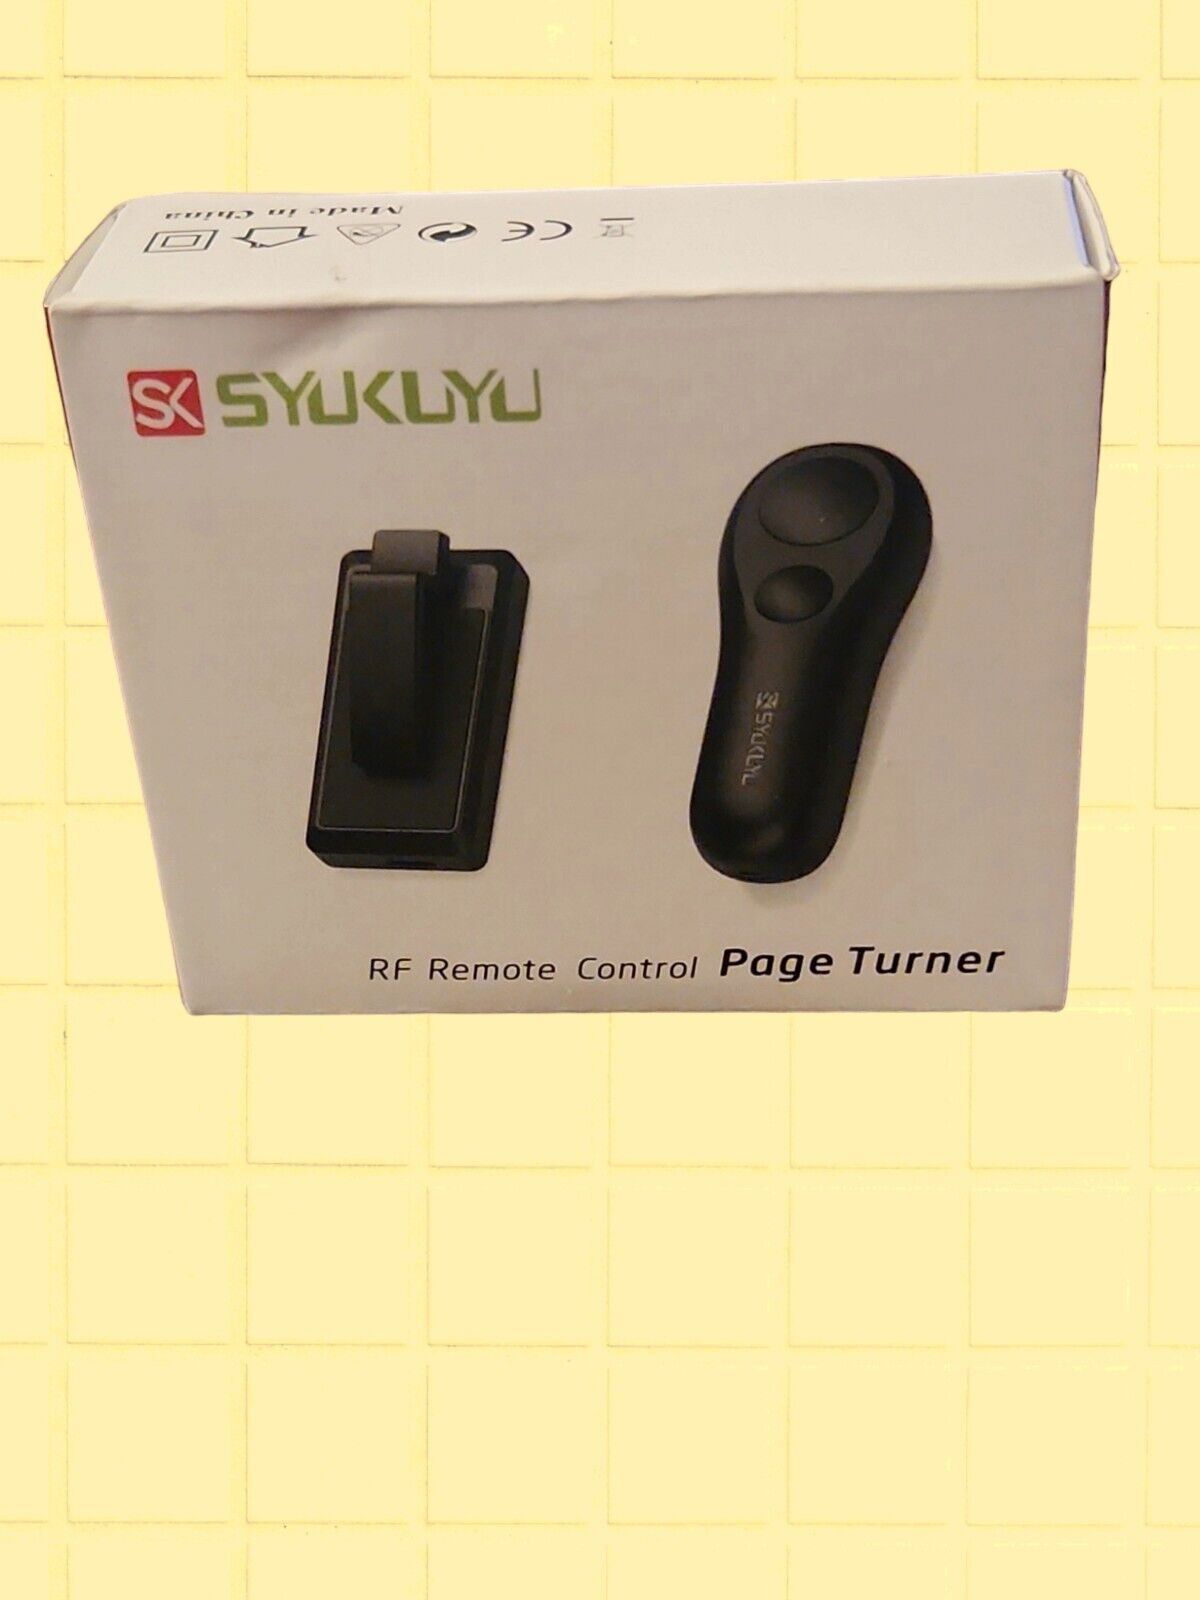  Universal Remote Control Page Turner  Kindle, IPhone, Ipad, E- Reader, Syukuyu